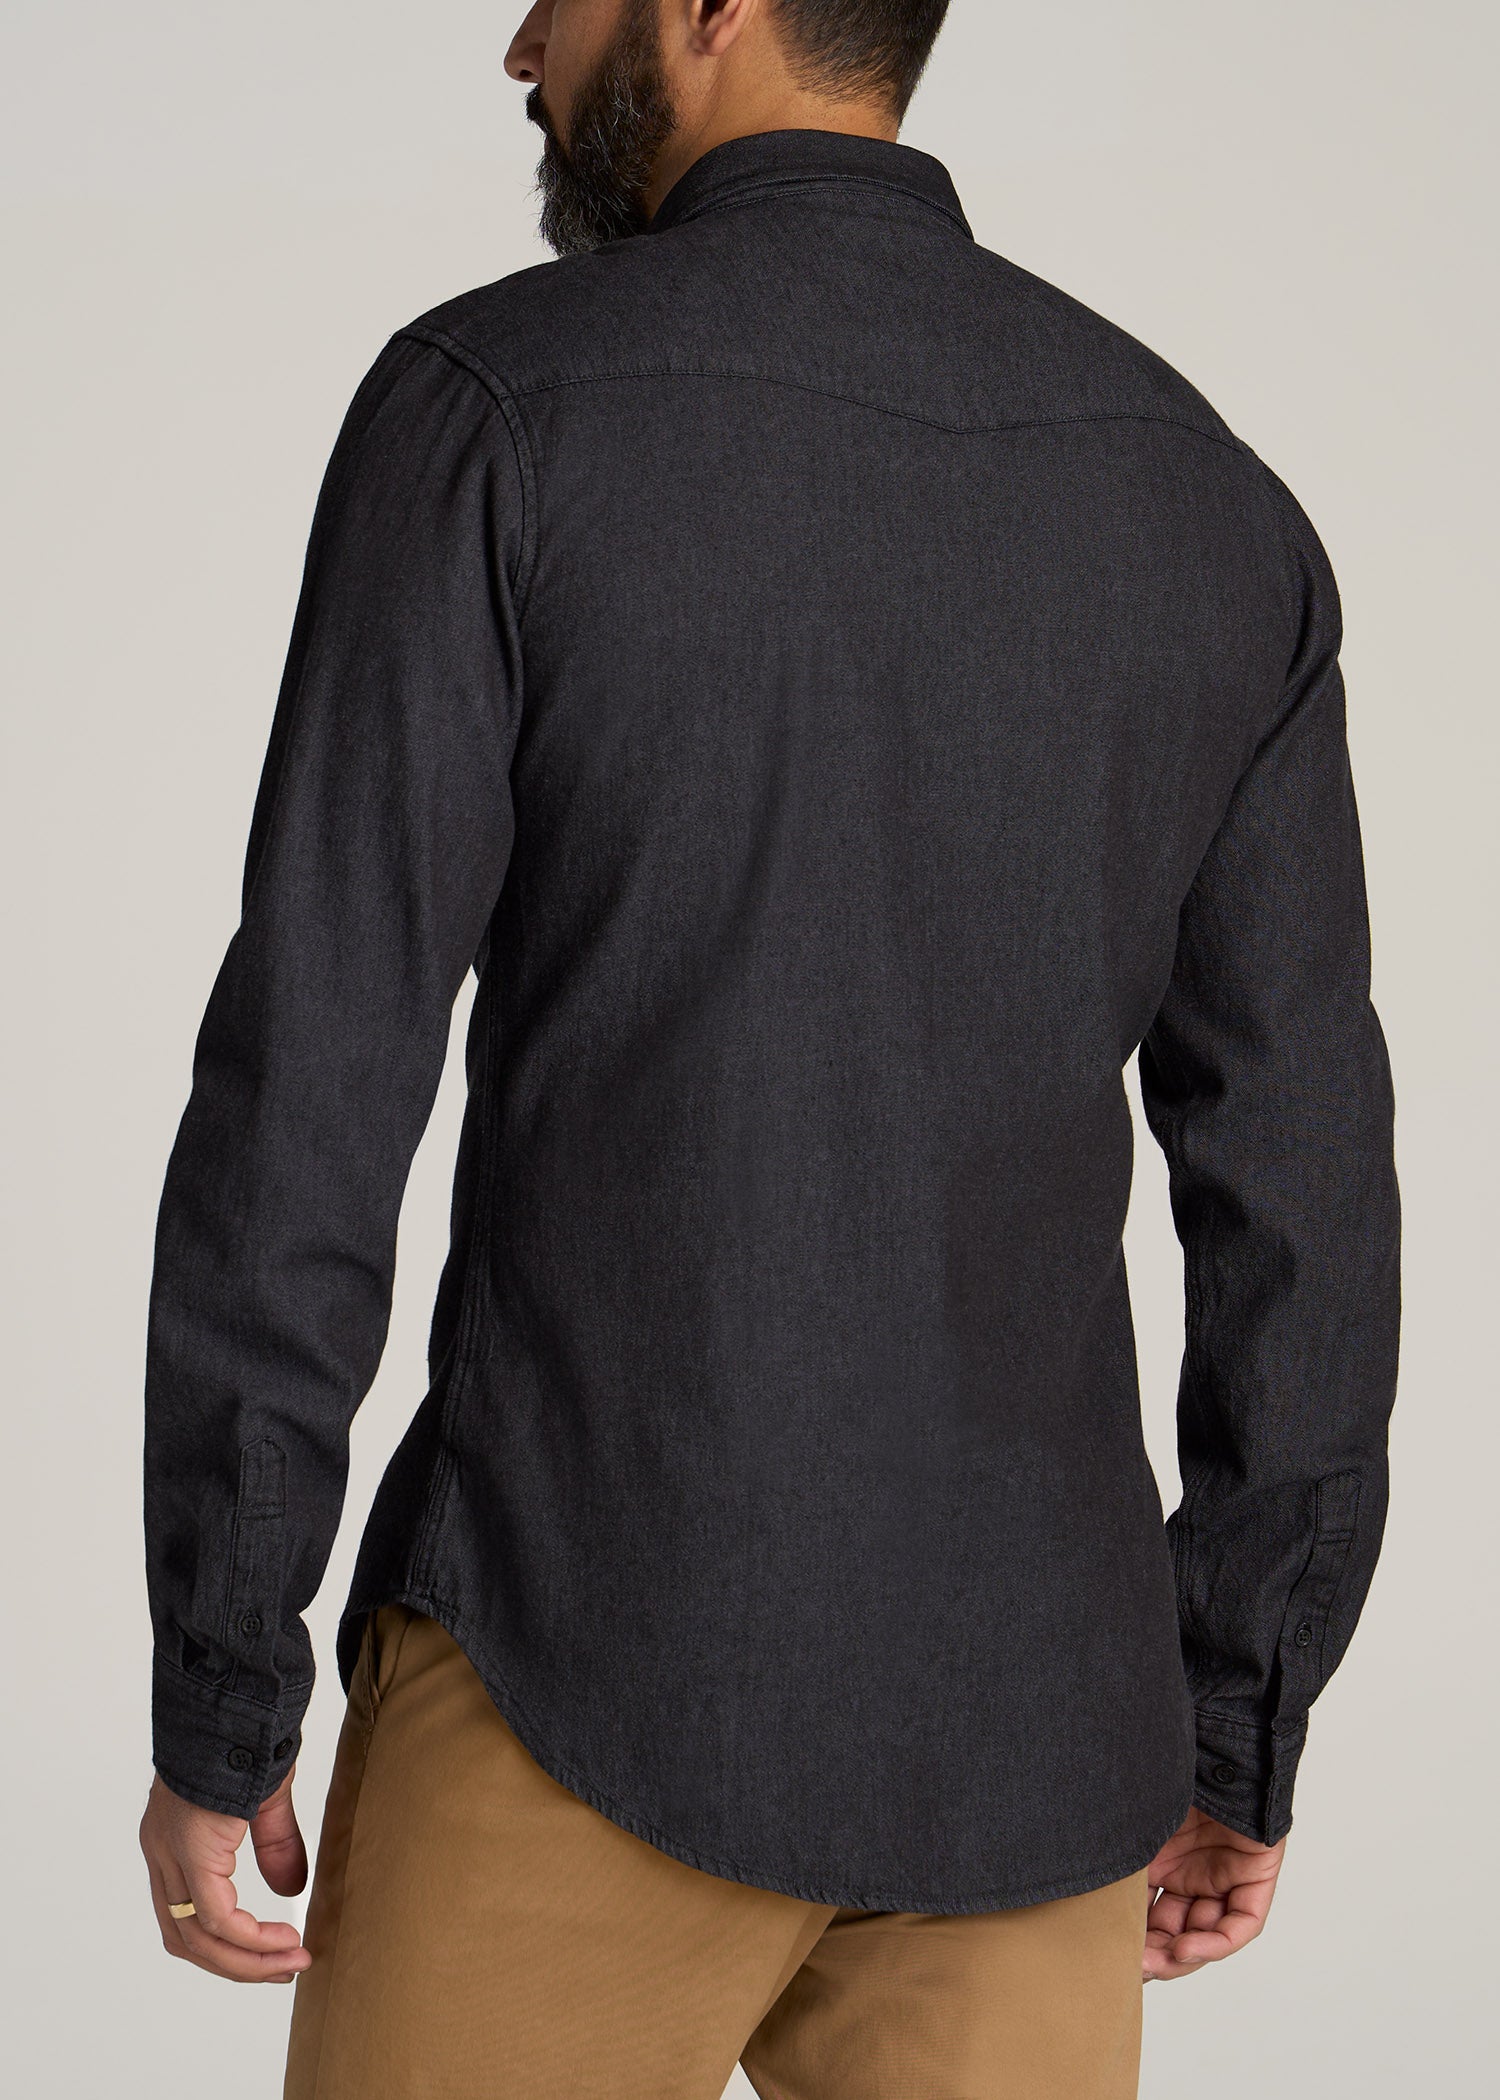 Men's Short Sleeve Western Denim Shirt in Medium Wash